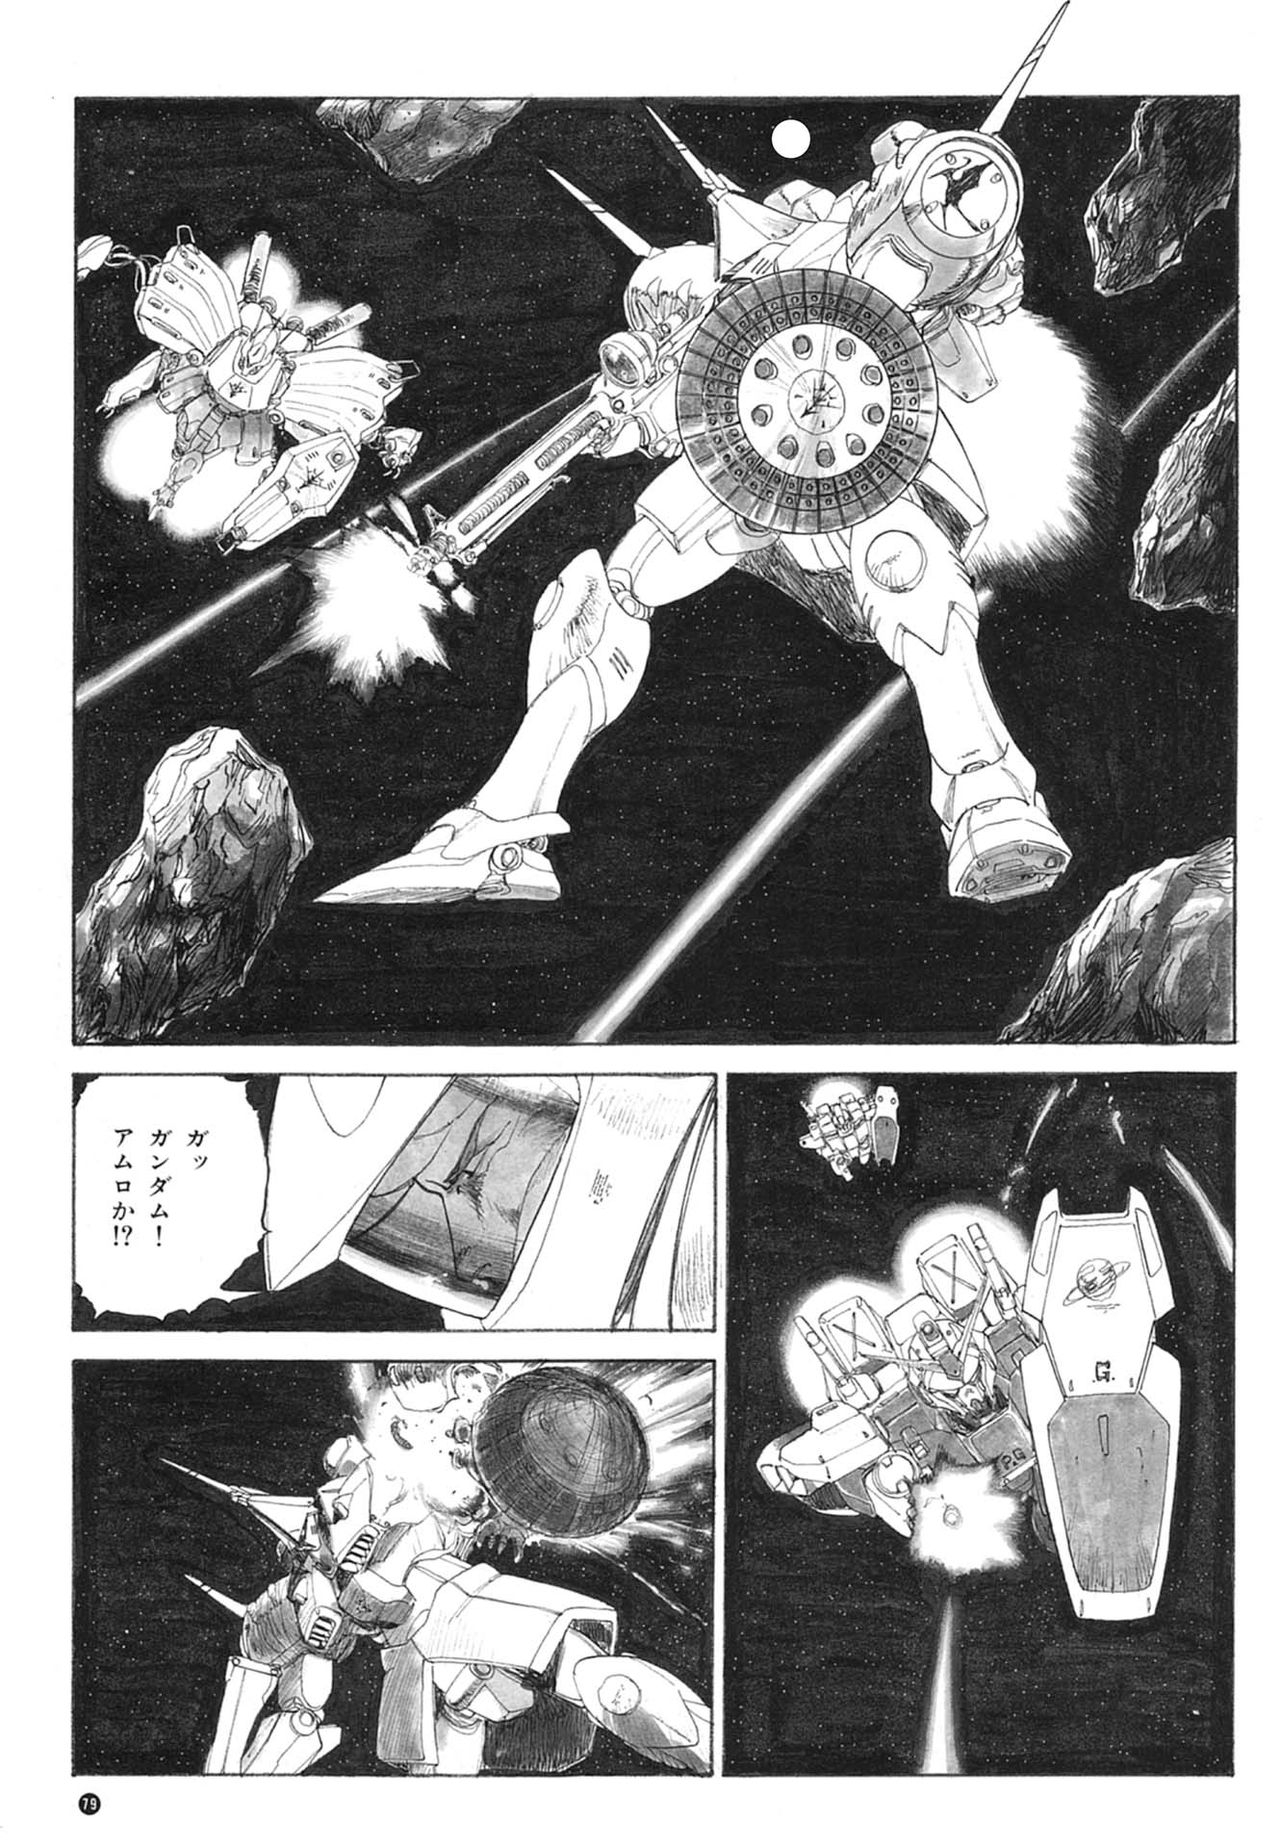 [Kazuhisa Kondo] Kazuhisa Kondo 2D & 3D Works - Go Ahead - From Mobile Suit Gundam to Original Mechanism 78